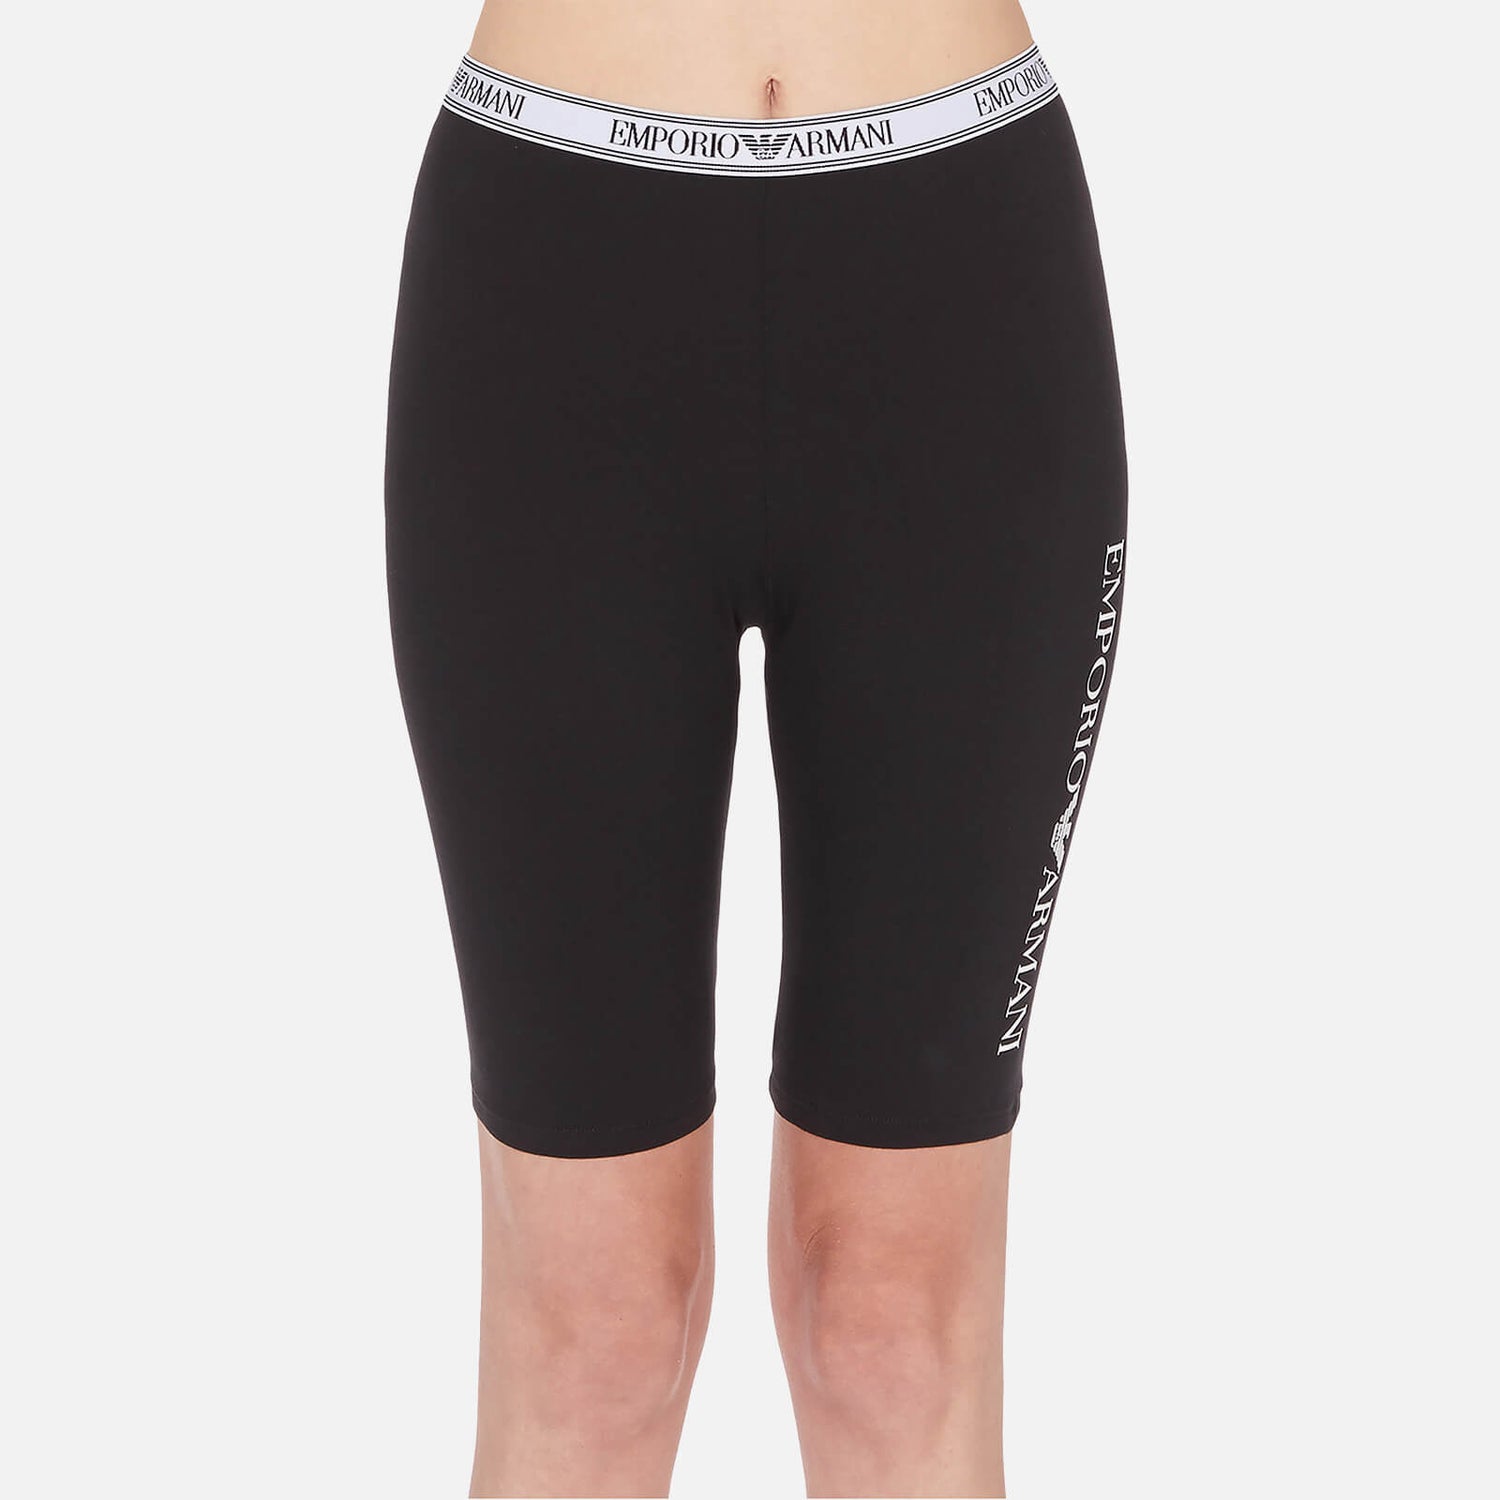 Emporio Armani Women's Iconic Logoband Biker Shorts - Black - XS